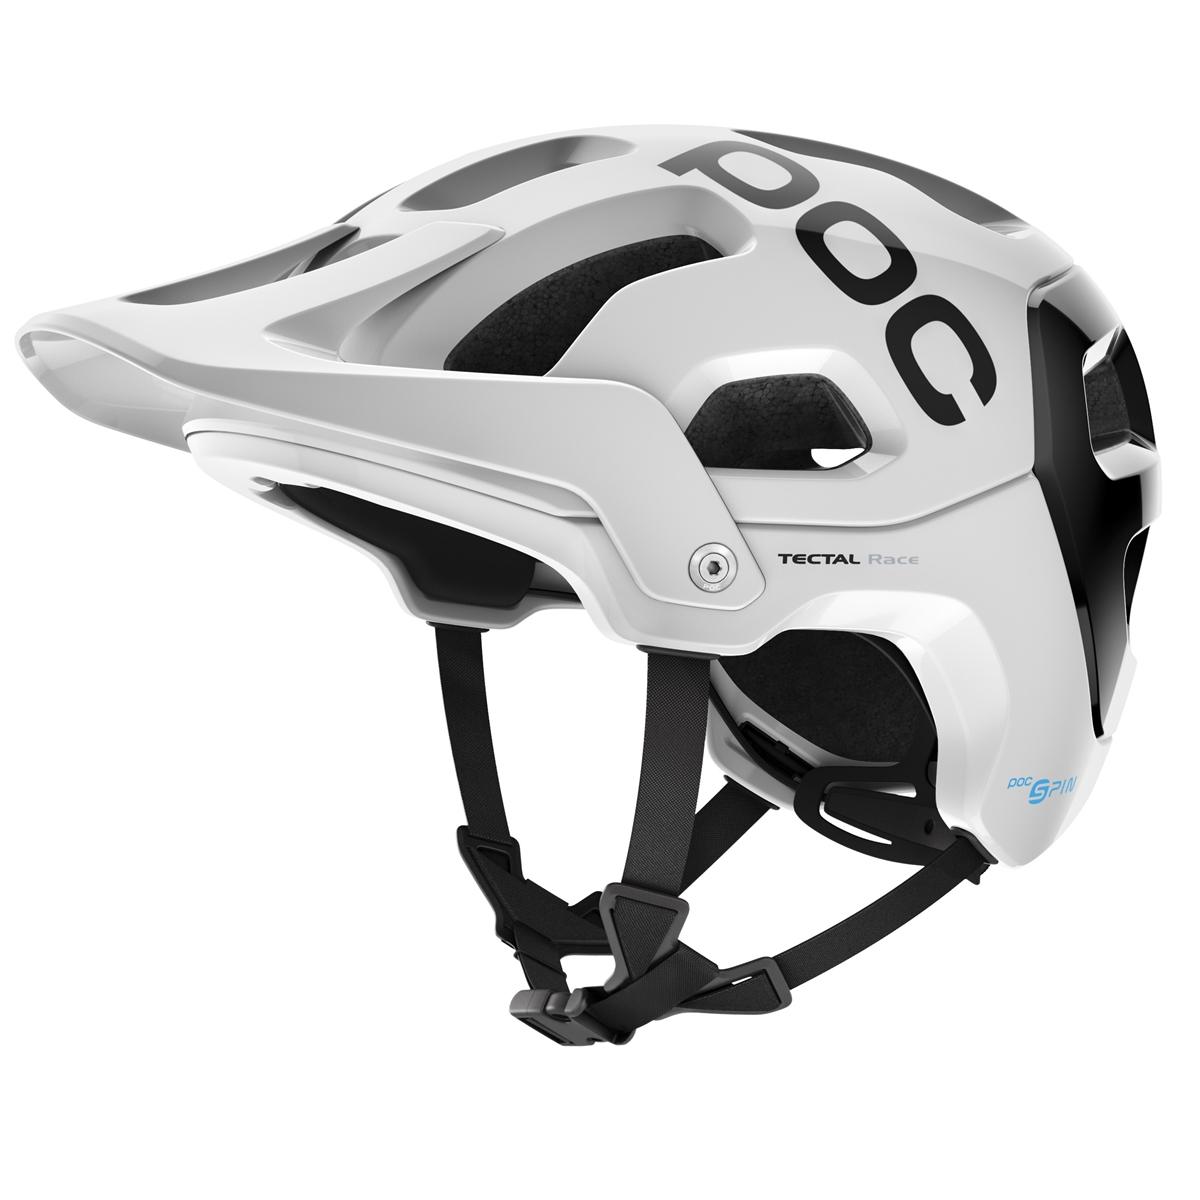 Enduro helmet Tectal Race Spin white size XS-S (51-54cm)